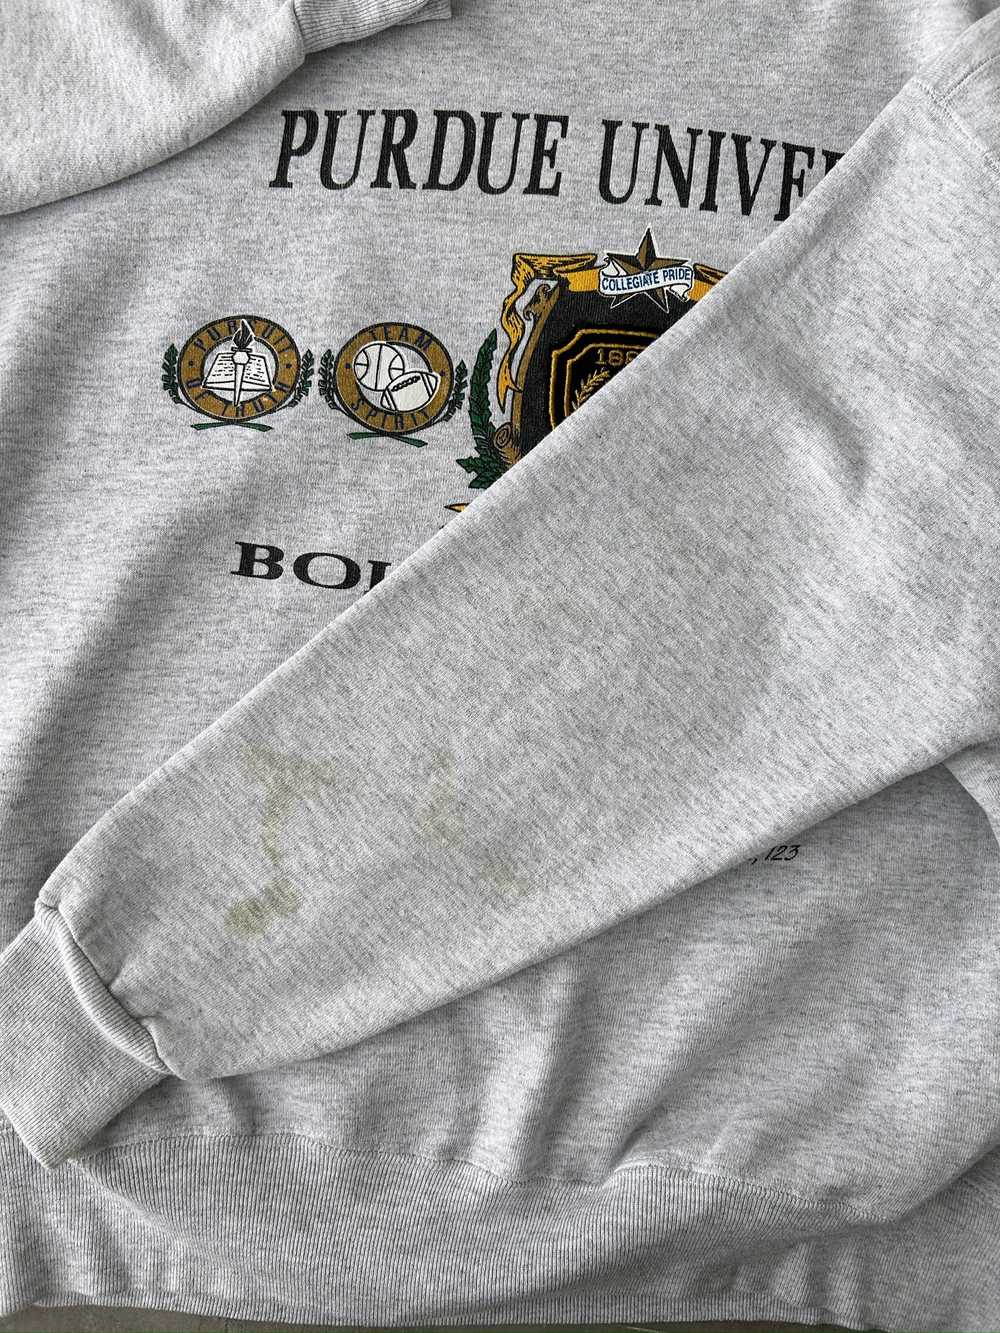 Purdue University Sweatshirt 90's - XL - image 4